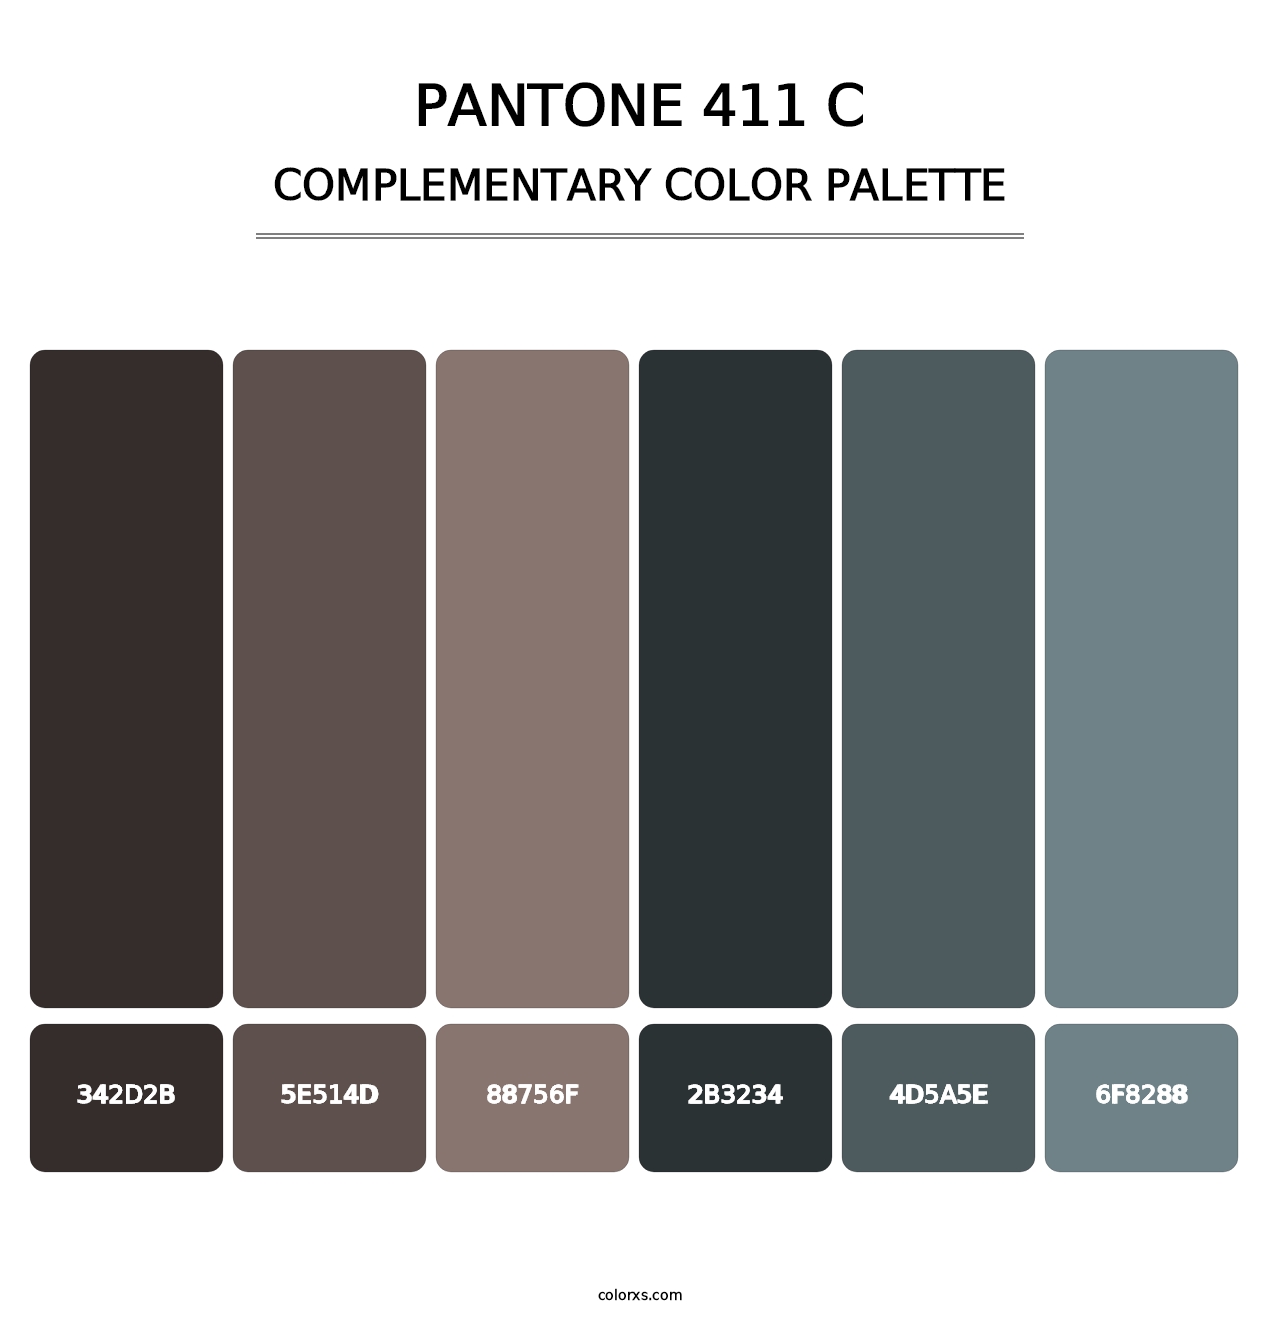 PANTONE 411 C - Complementary Color Palette